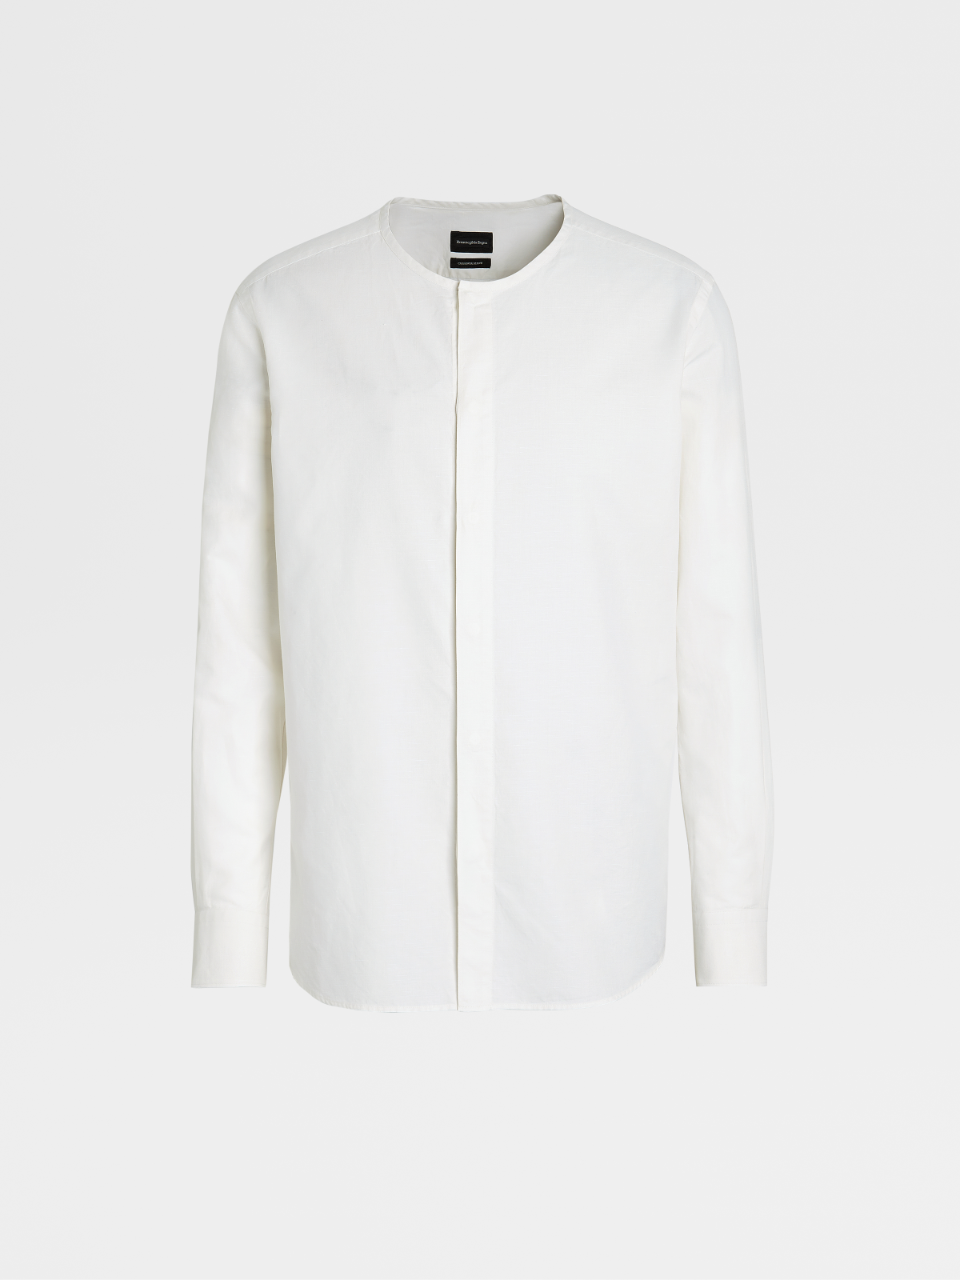 White Cotton Linen and Silk Henley Shirt, Milano Regular Fit